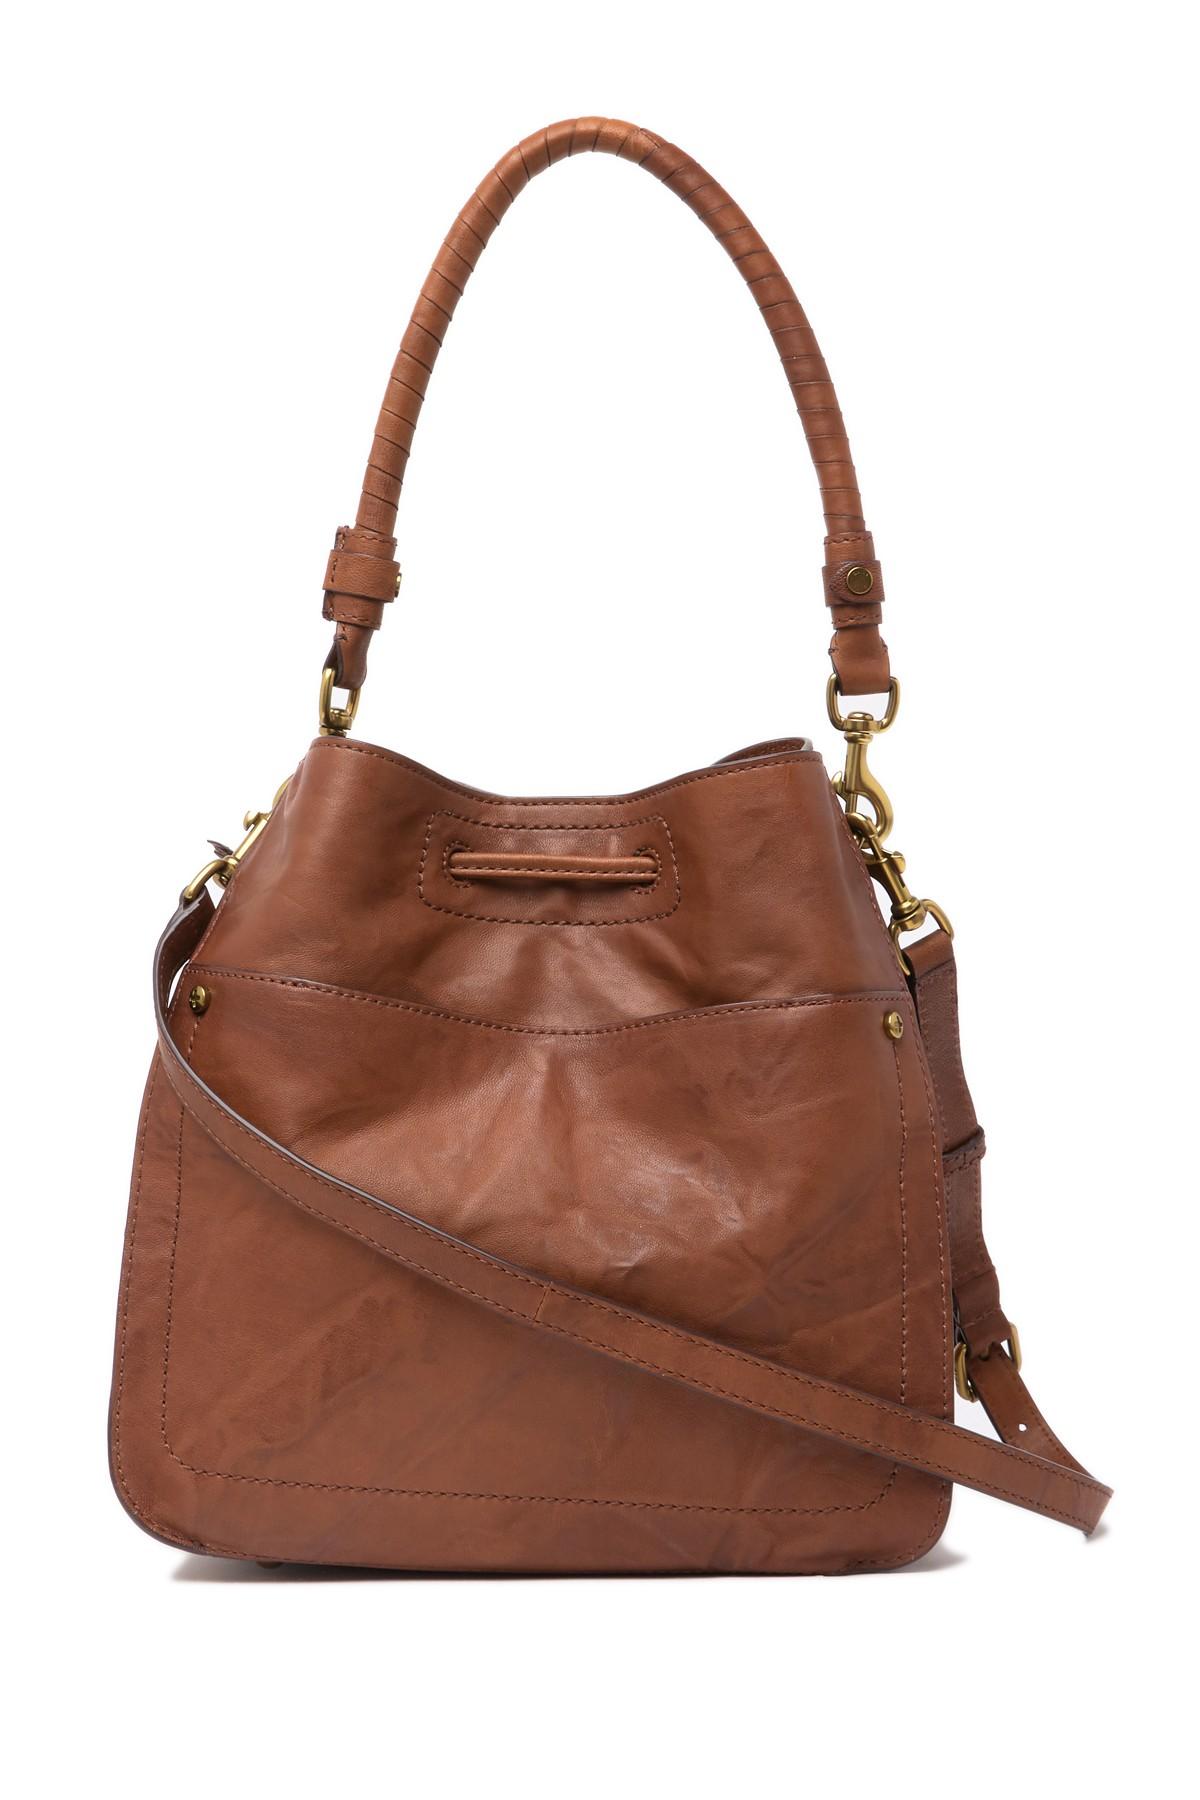 Frye Leather Demi Hobo Bag in Brown - Lyst